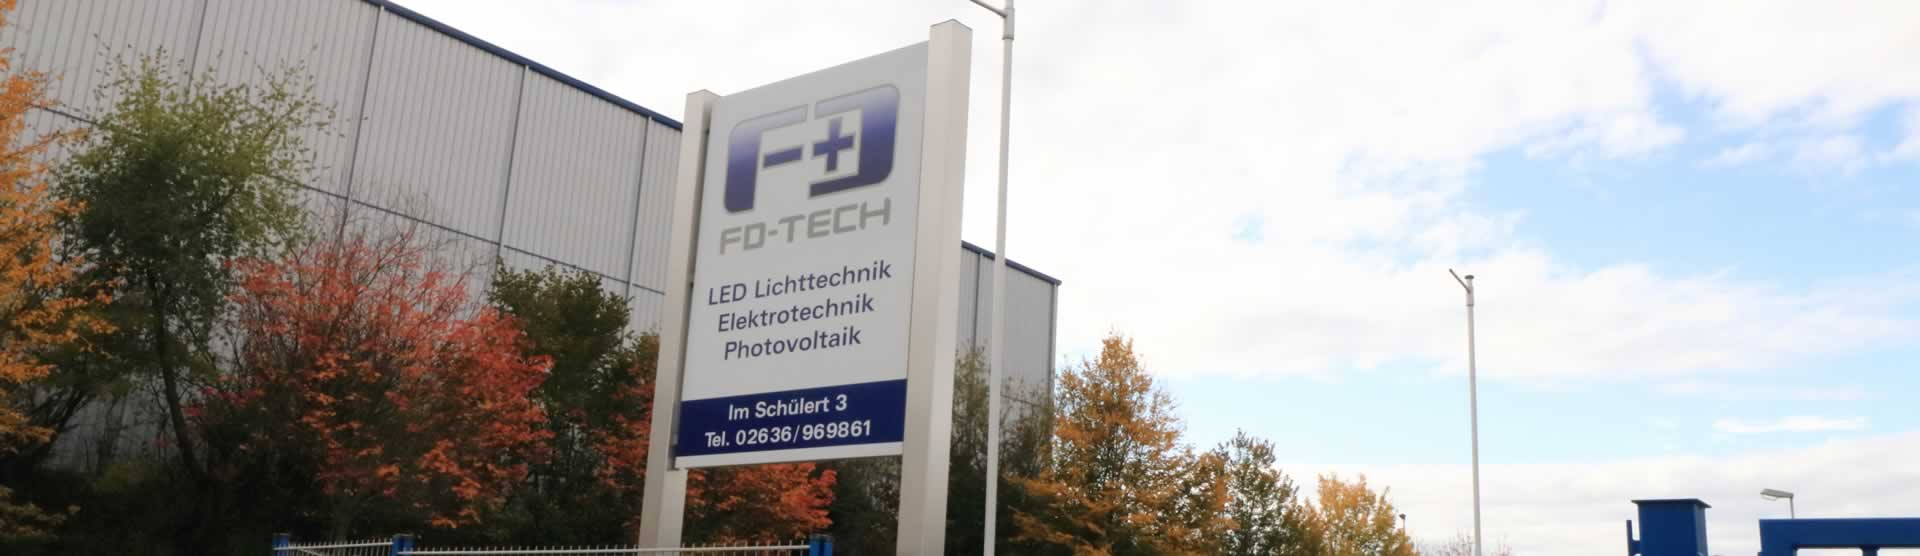 Elektromeisterbetrieb FD-Tech GmbH Niederzissen